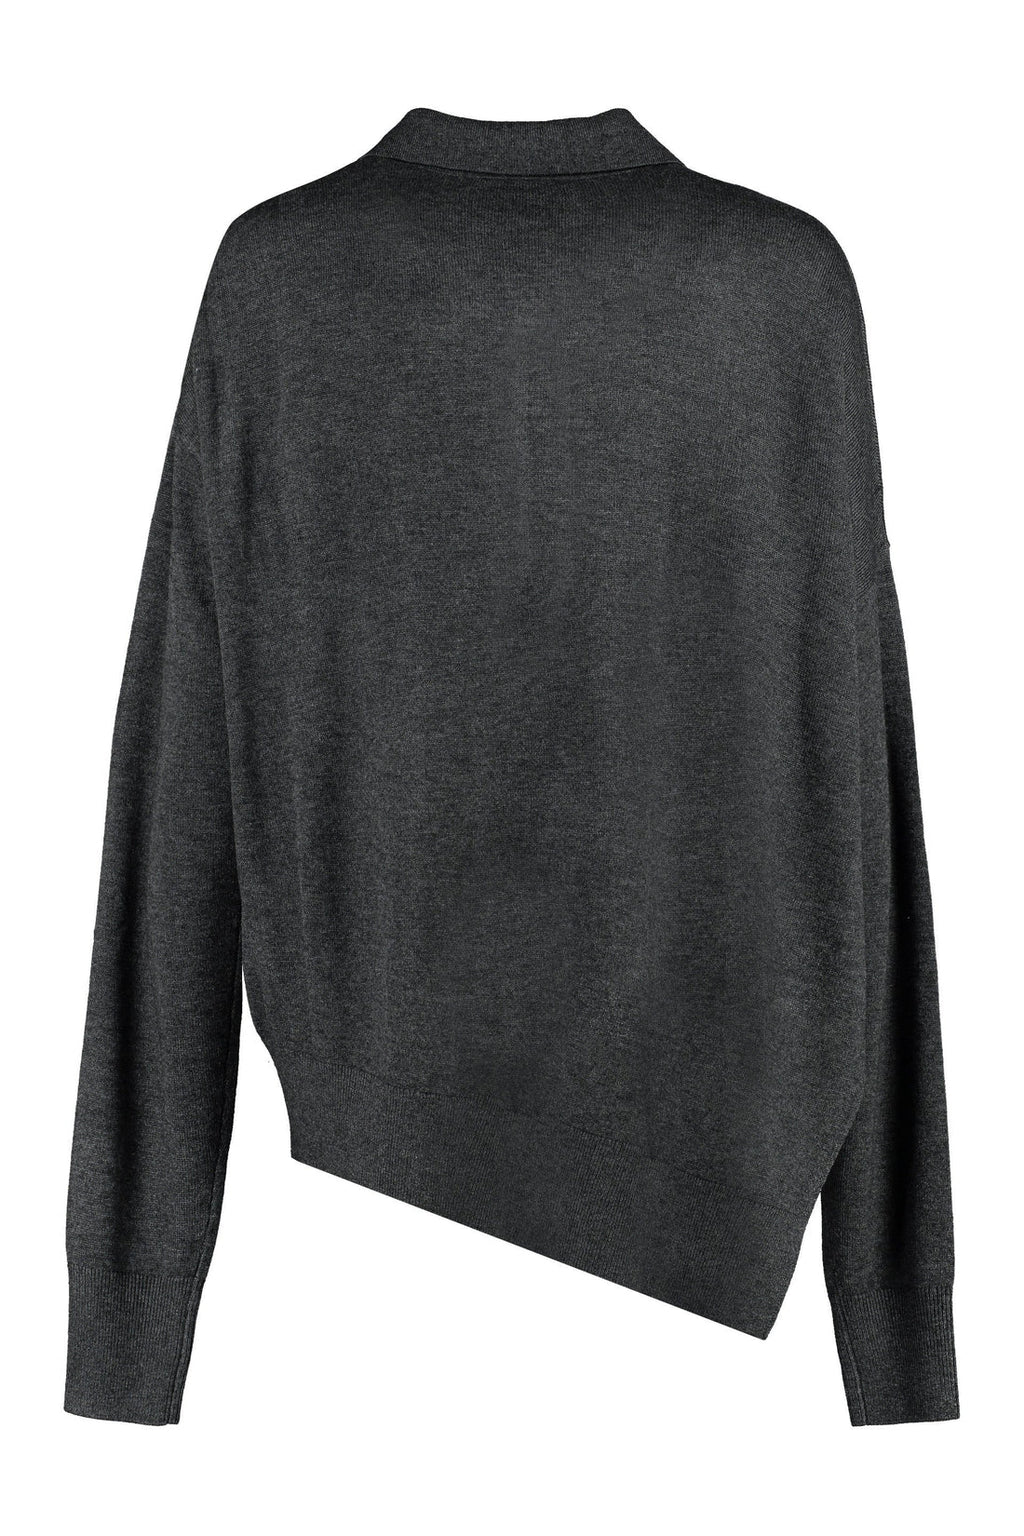 Isabel Marant-OUTLET-SALE-Giliane wool blend sweater-ARCHIVIST